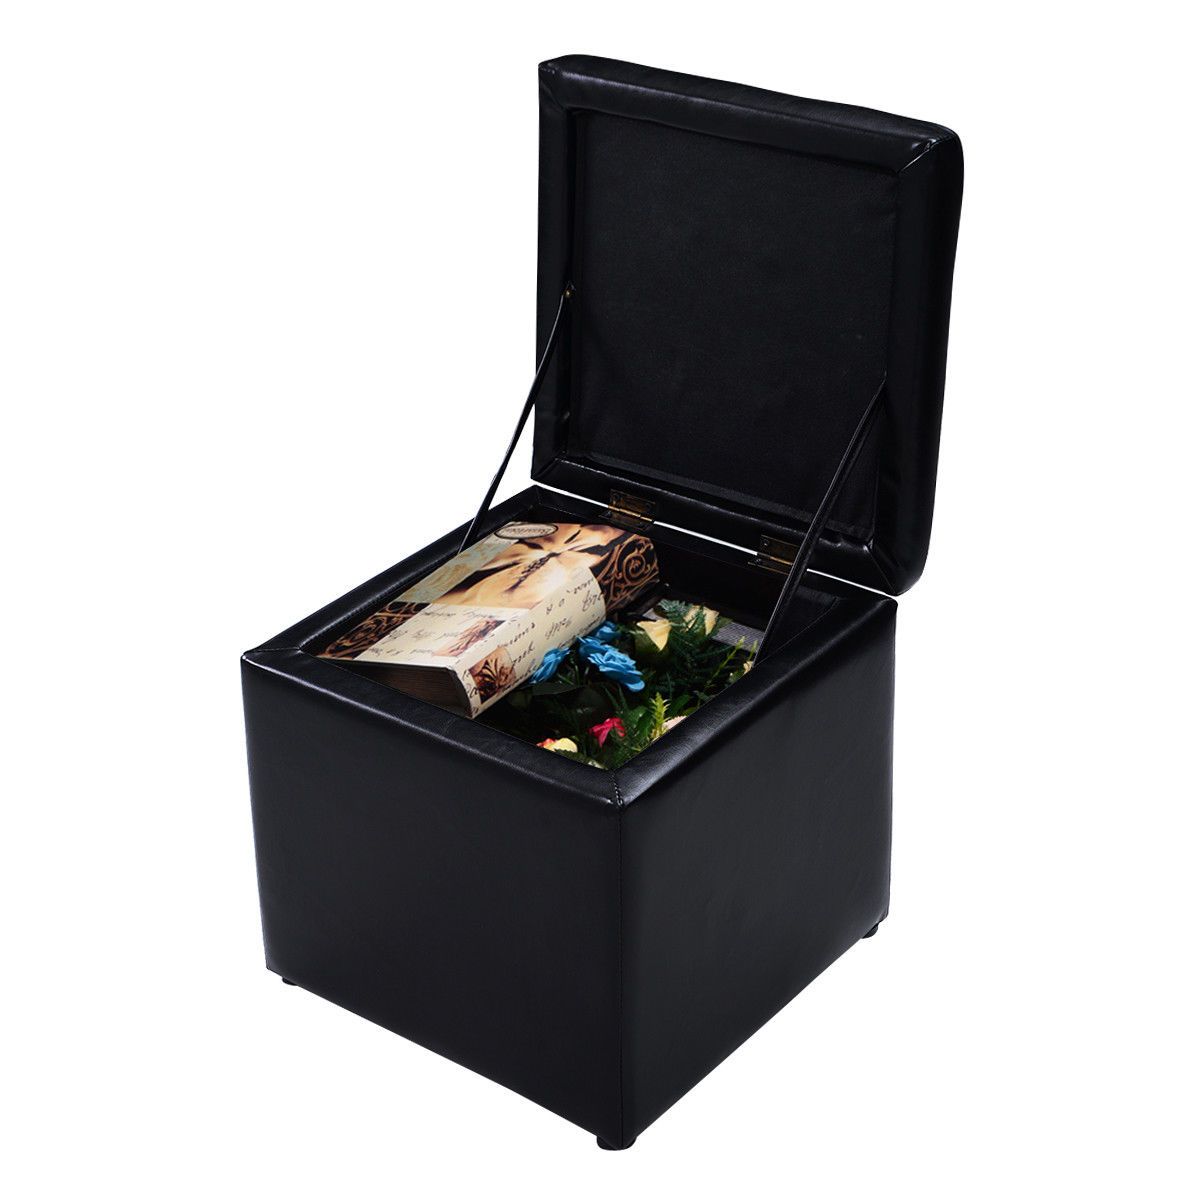 High Quality PU Leather Cube Ottoman Storage Seat - Black